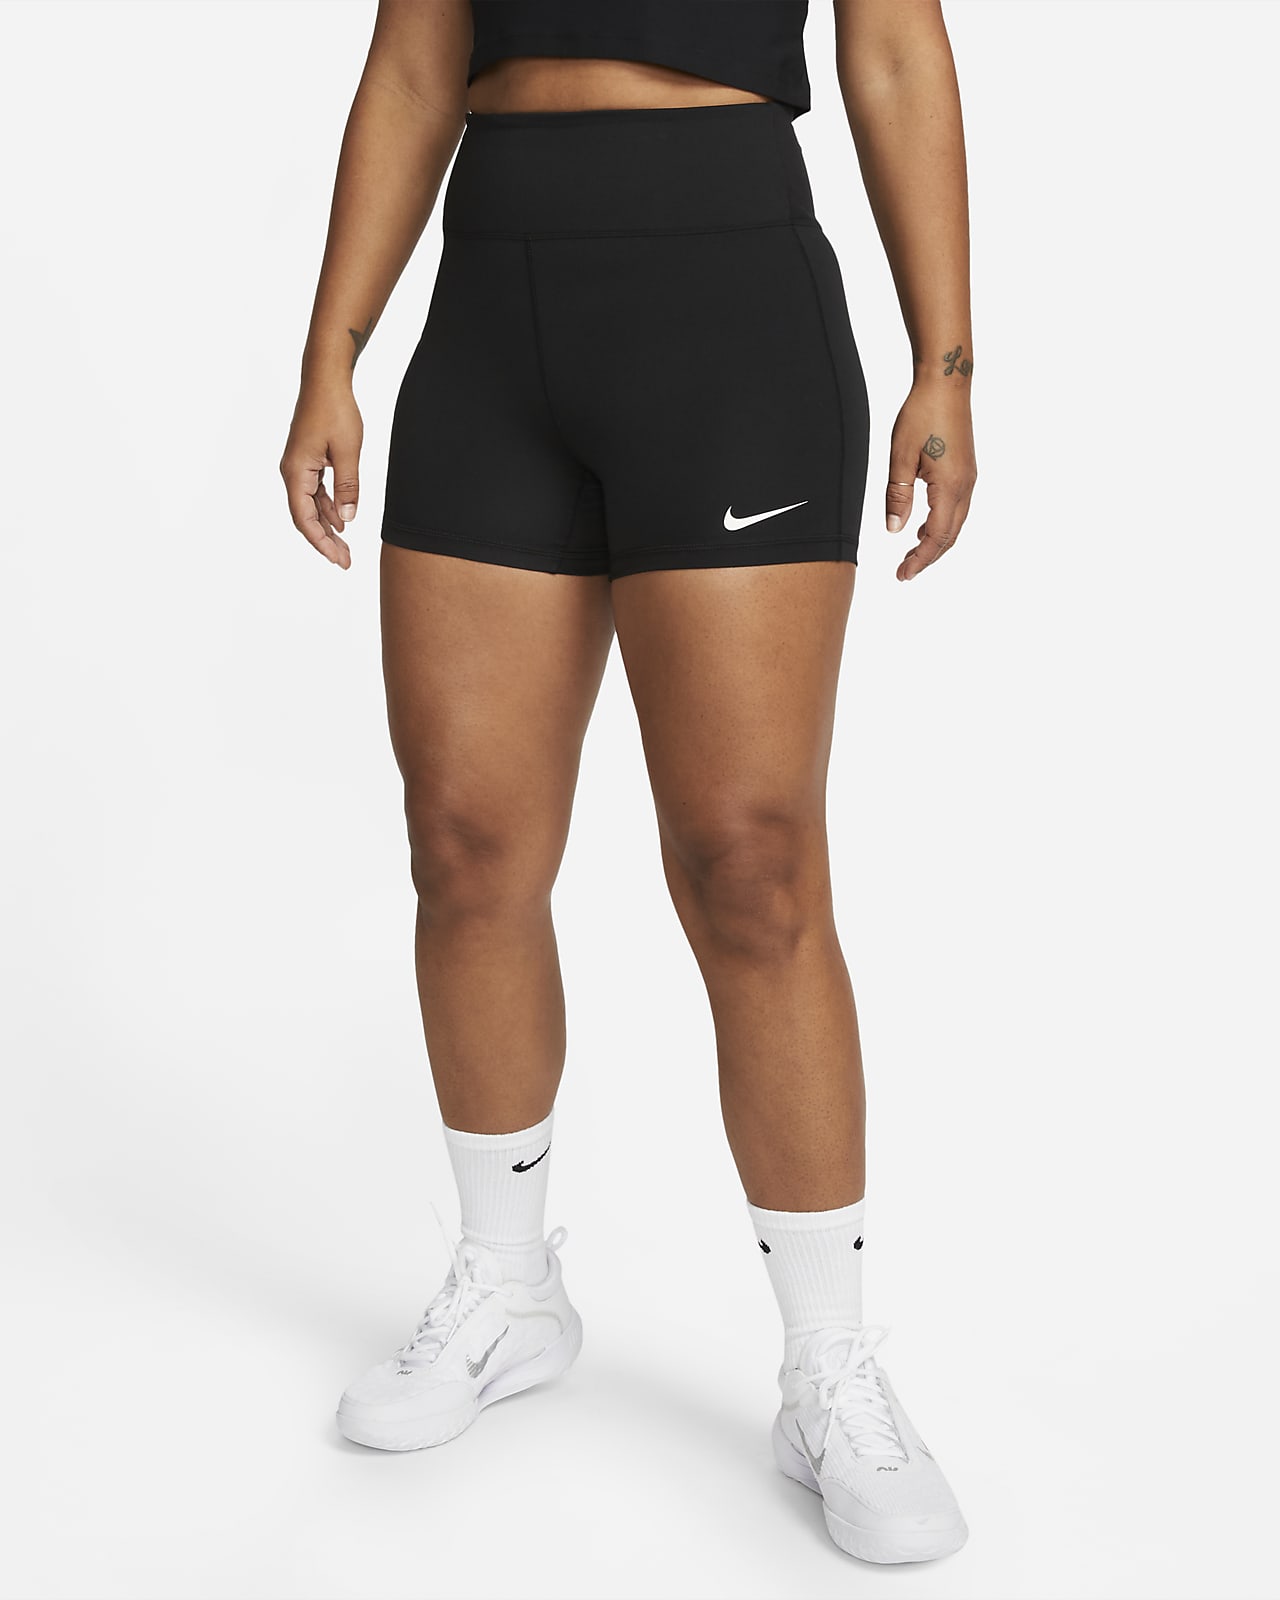 bouwer potlood wijsheid Nike Dri-FIT Advantage Tennisshorts met hoge taille voor dames (10 cm). Nike  BE